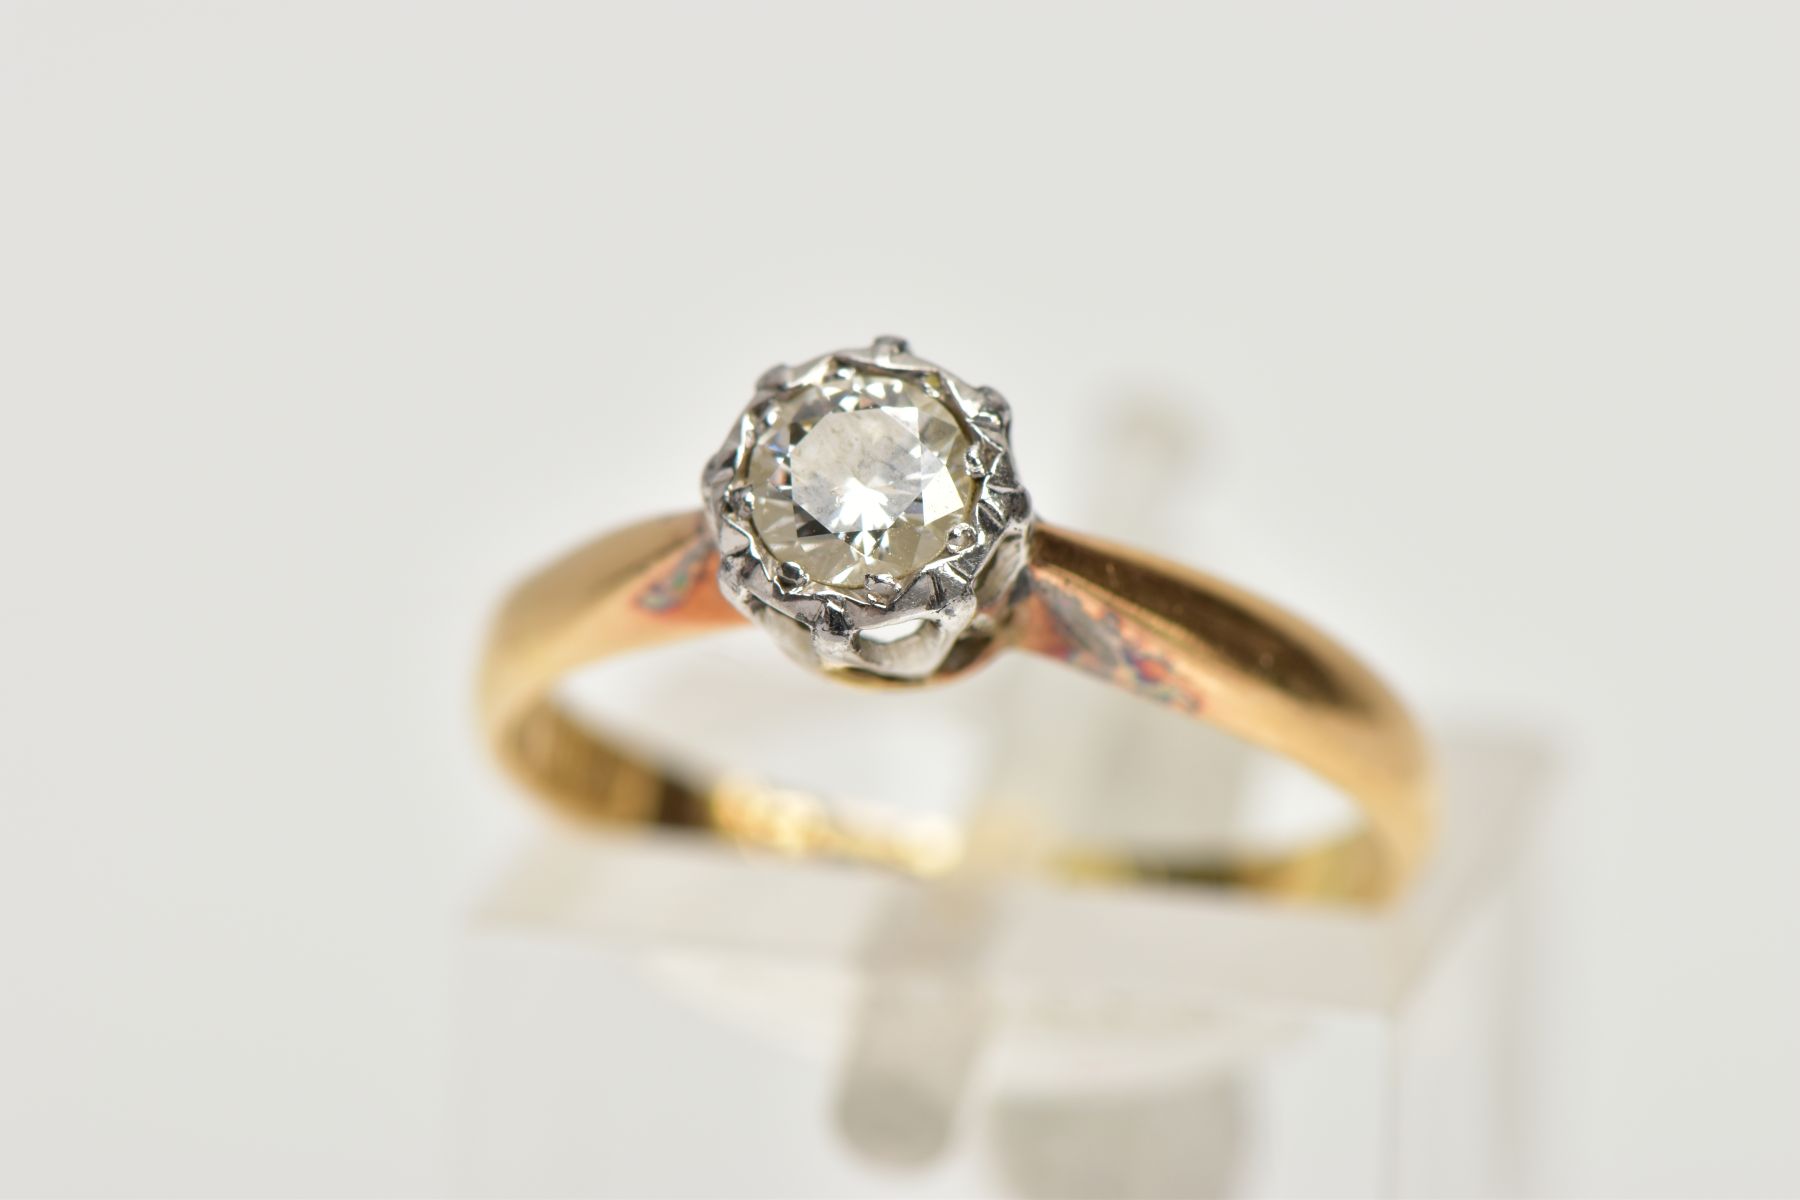 AN 18CT GOLD SINGLE STONE DIAMOND RING, centring on an illusion set round brilliant cut diamond,